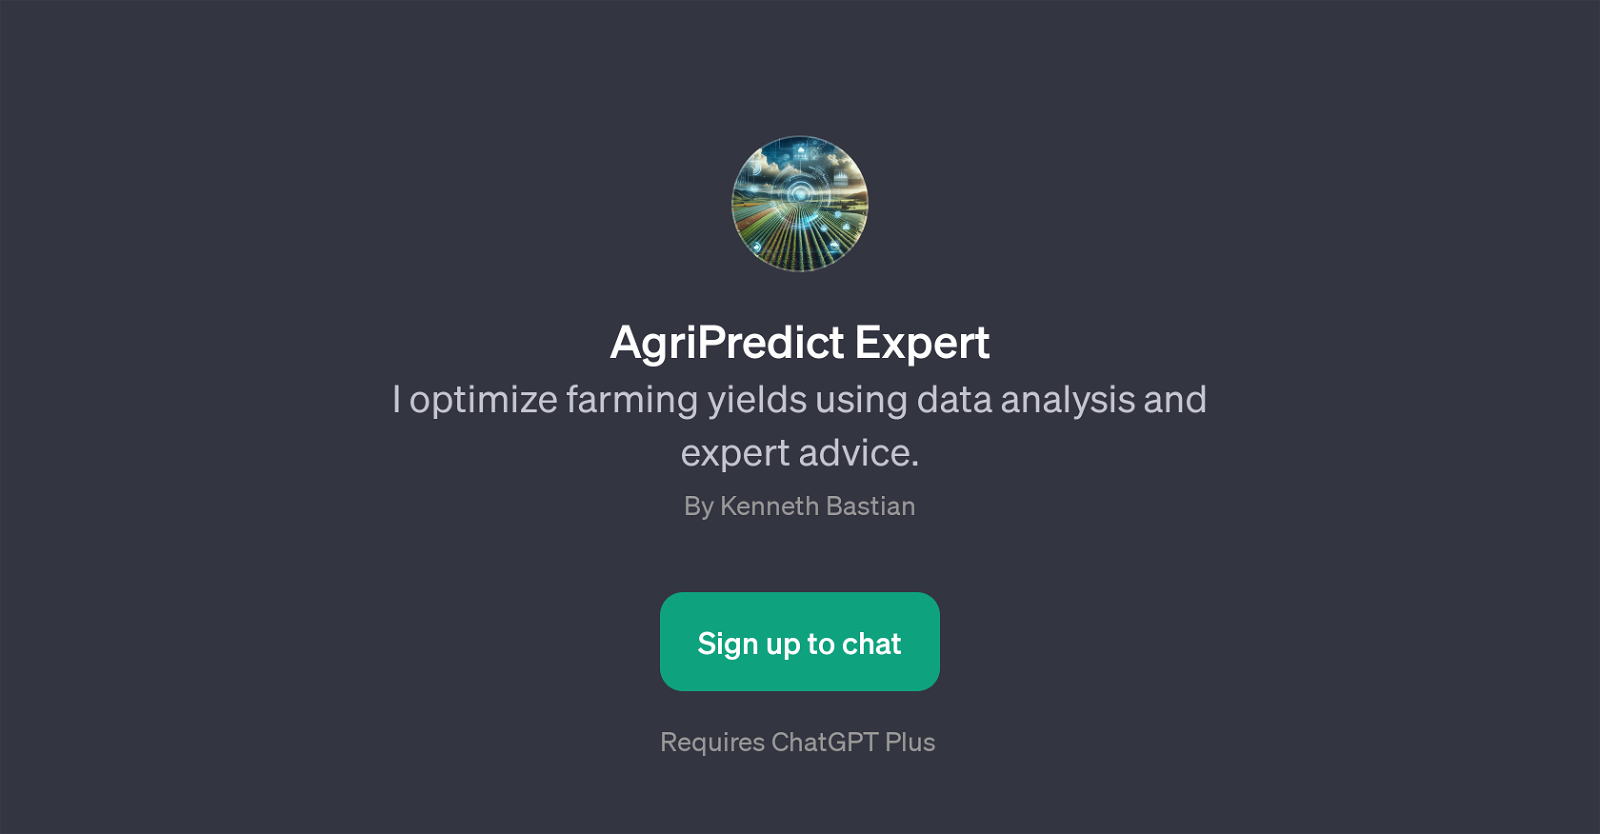 AgriPredict Expert website